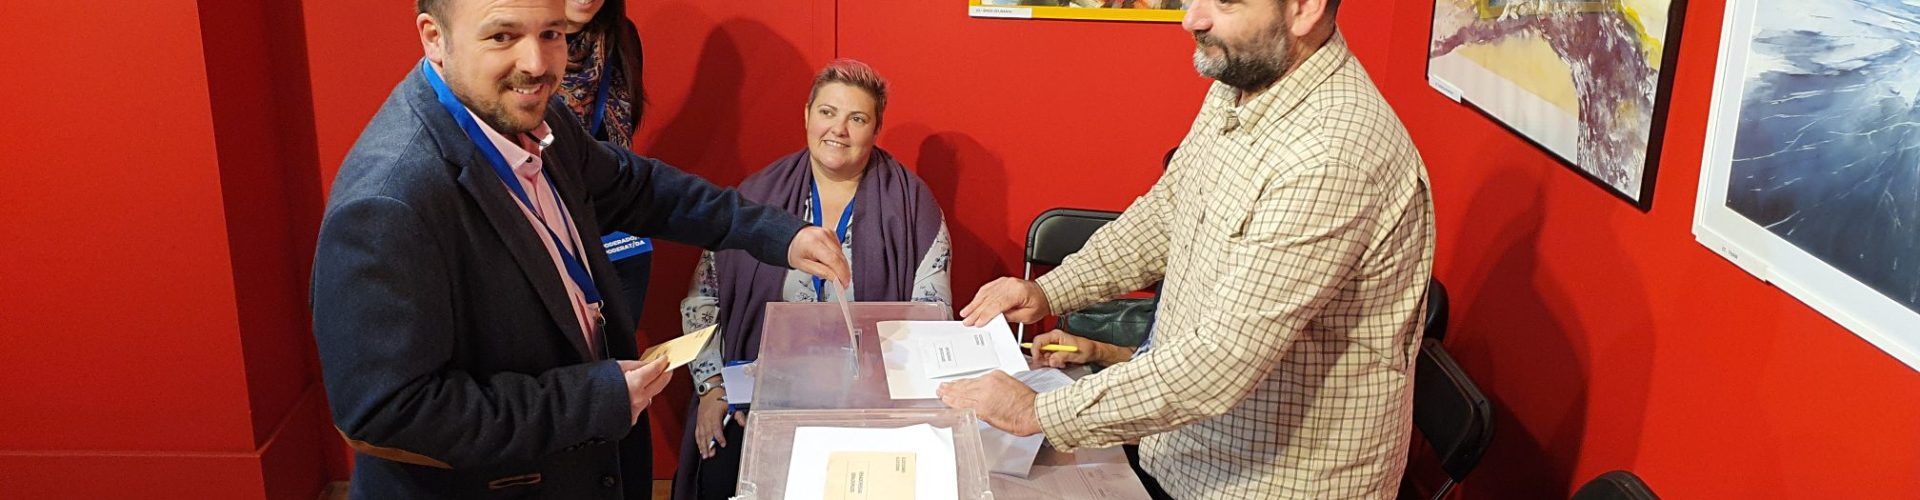 Lluís Gandía i Guillem Alsina matinen a Vinaròs per anar a votar